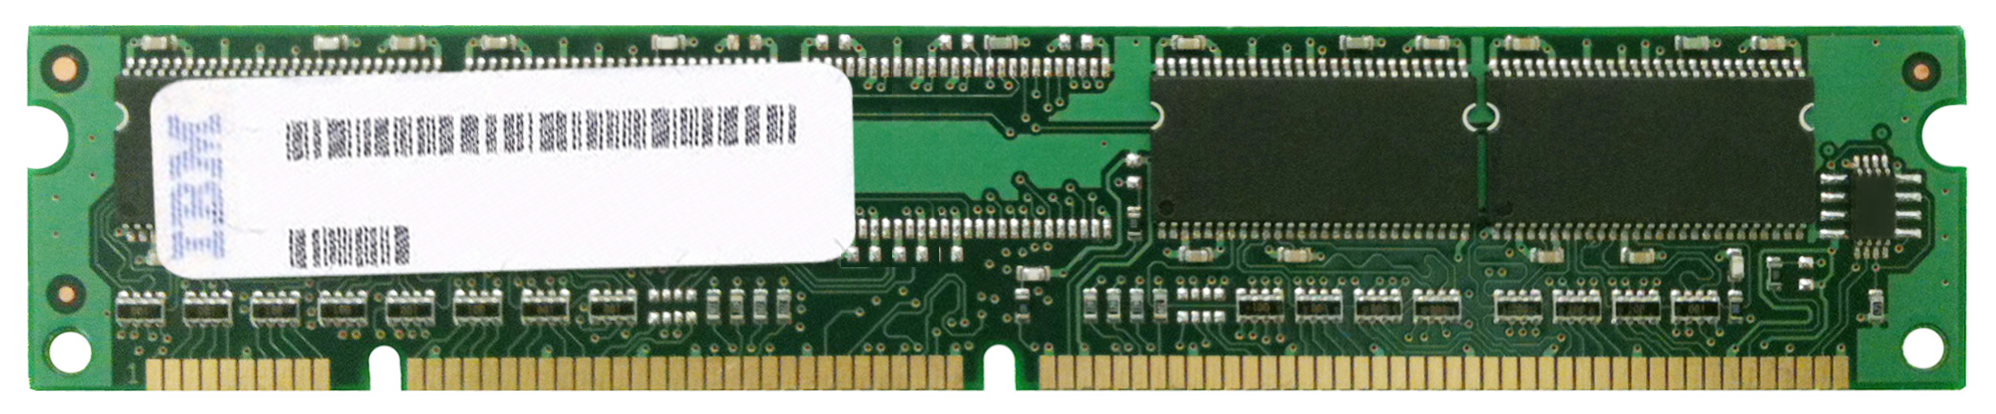 40X1508 IBM Ip1585 128MB Memory Option